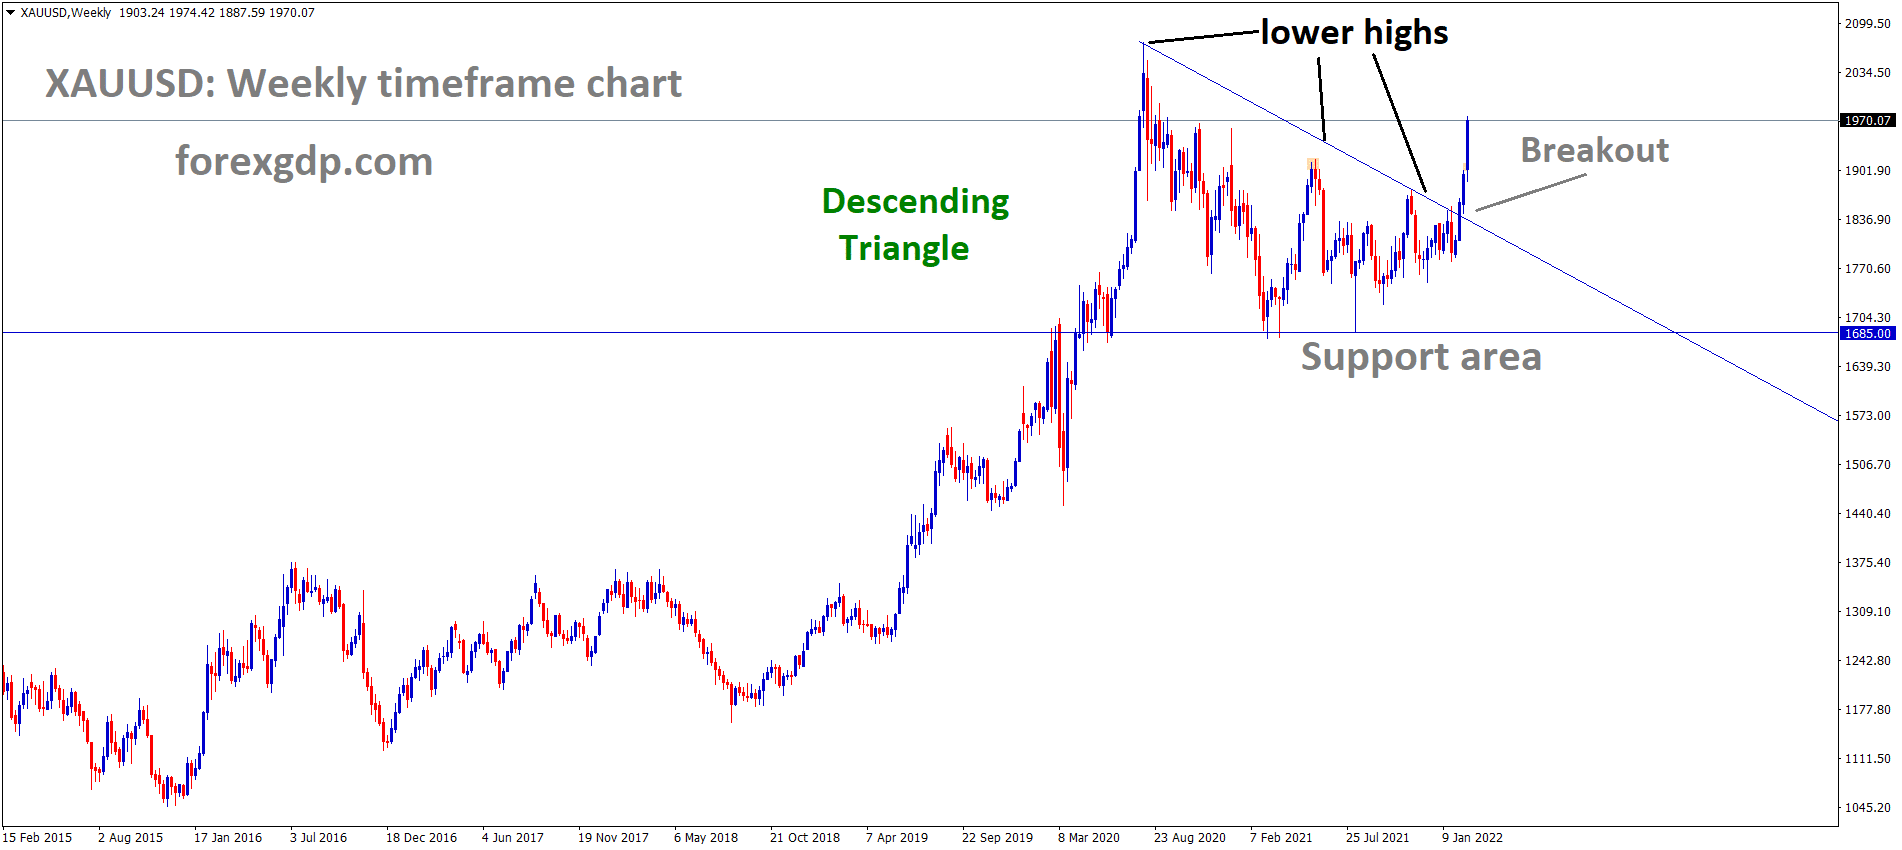 XAUUSD Gold price has broken the Descending Triangle pattern.